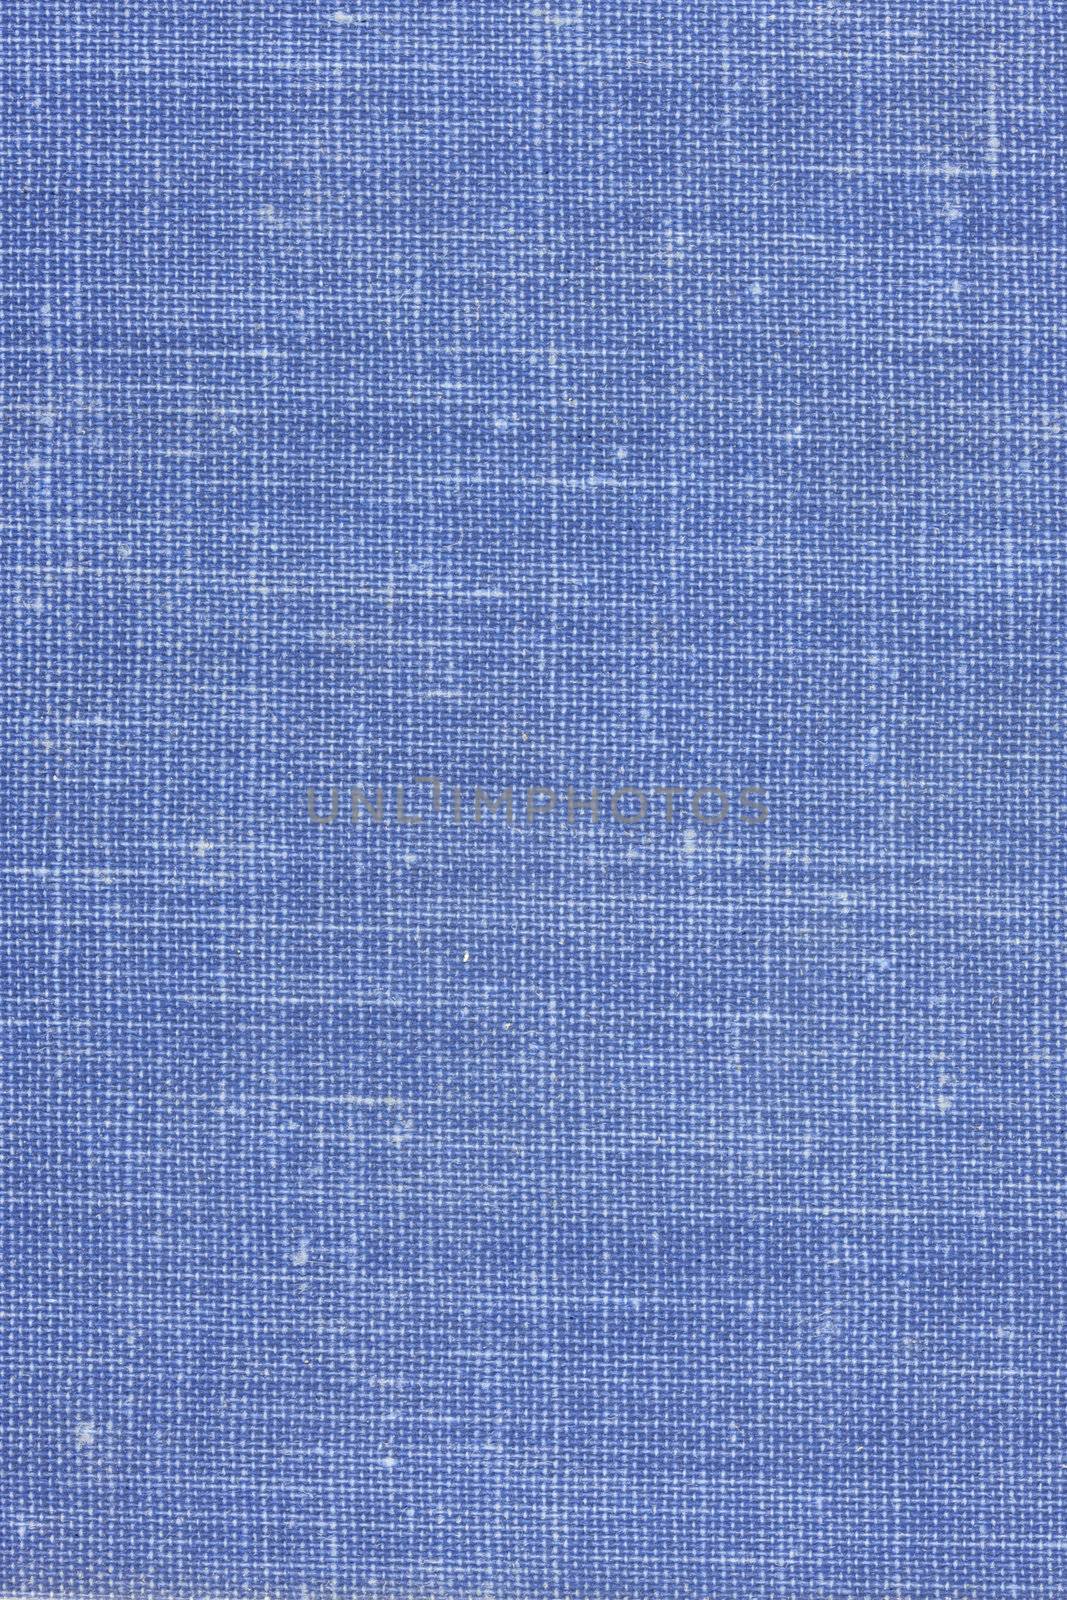 light blue textile background by PixelsAway